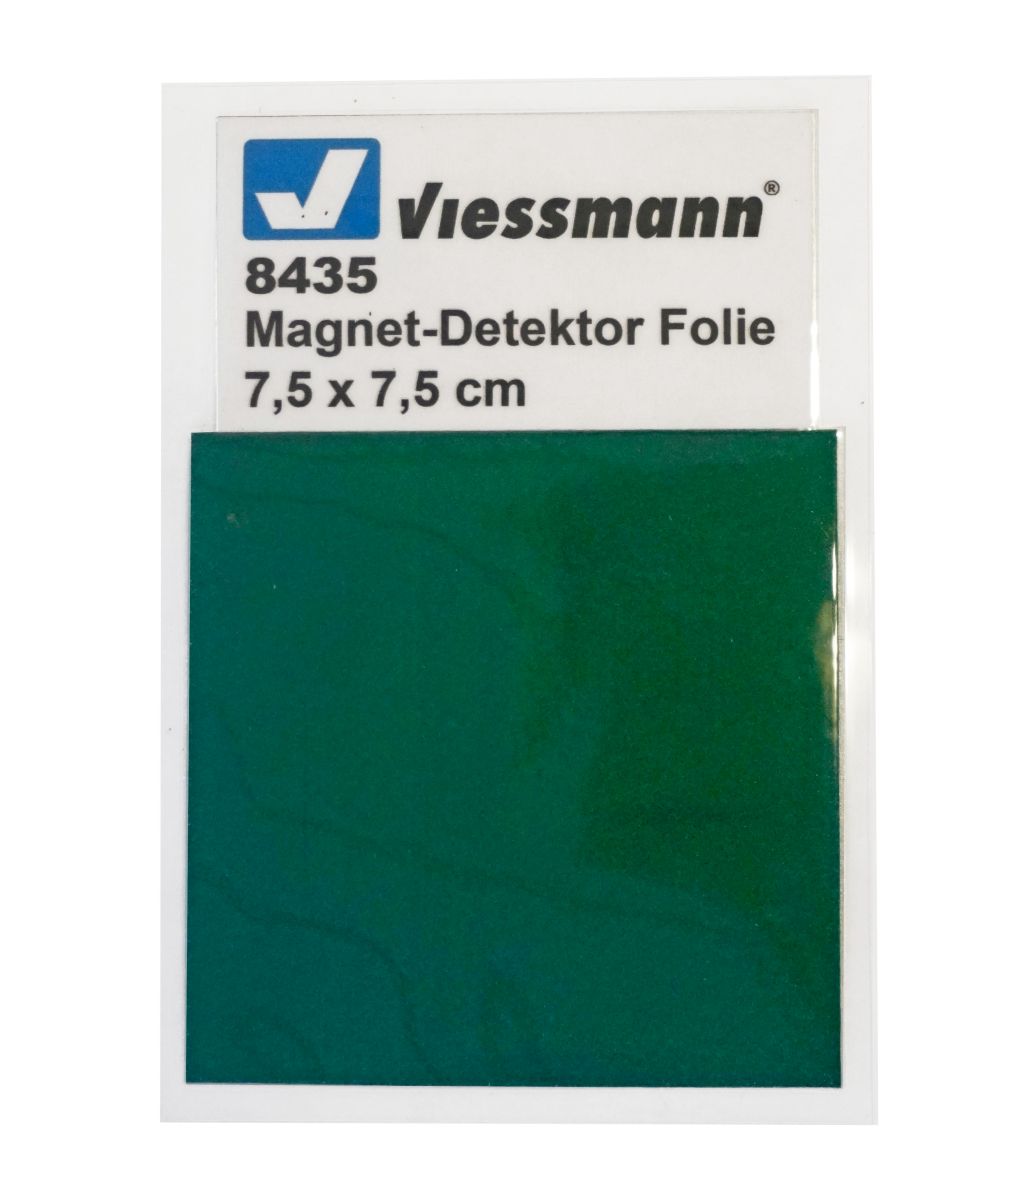 Viessmann 8435 - Magnet-Detektor Folie L 7,5 x B 7,5 cm